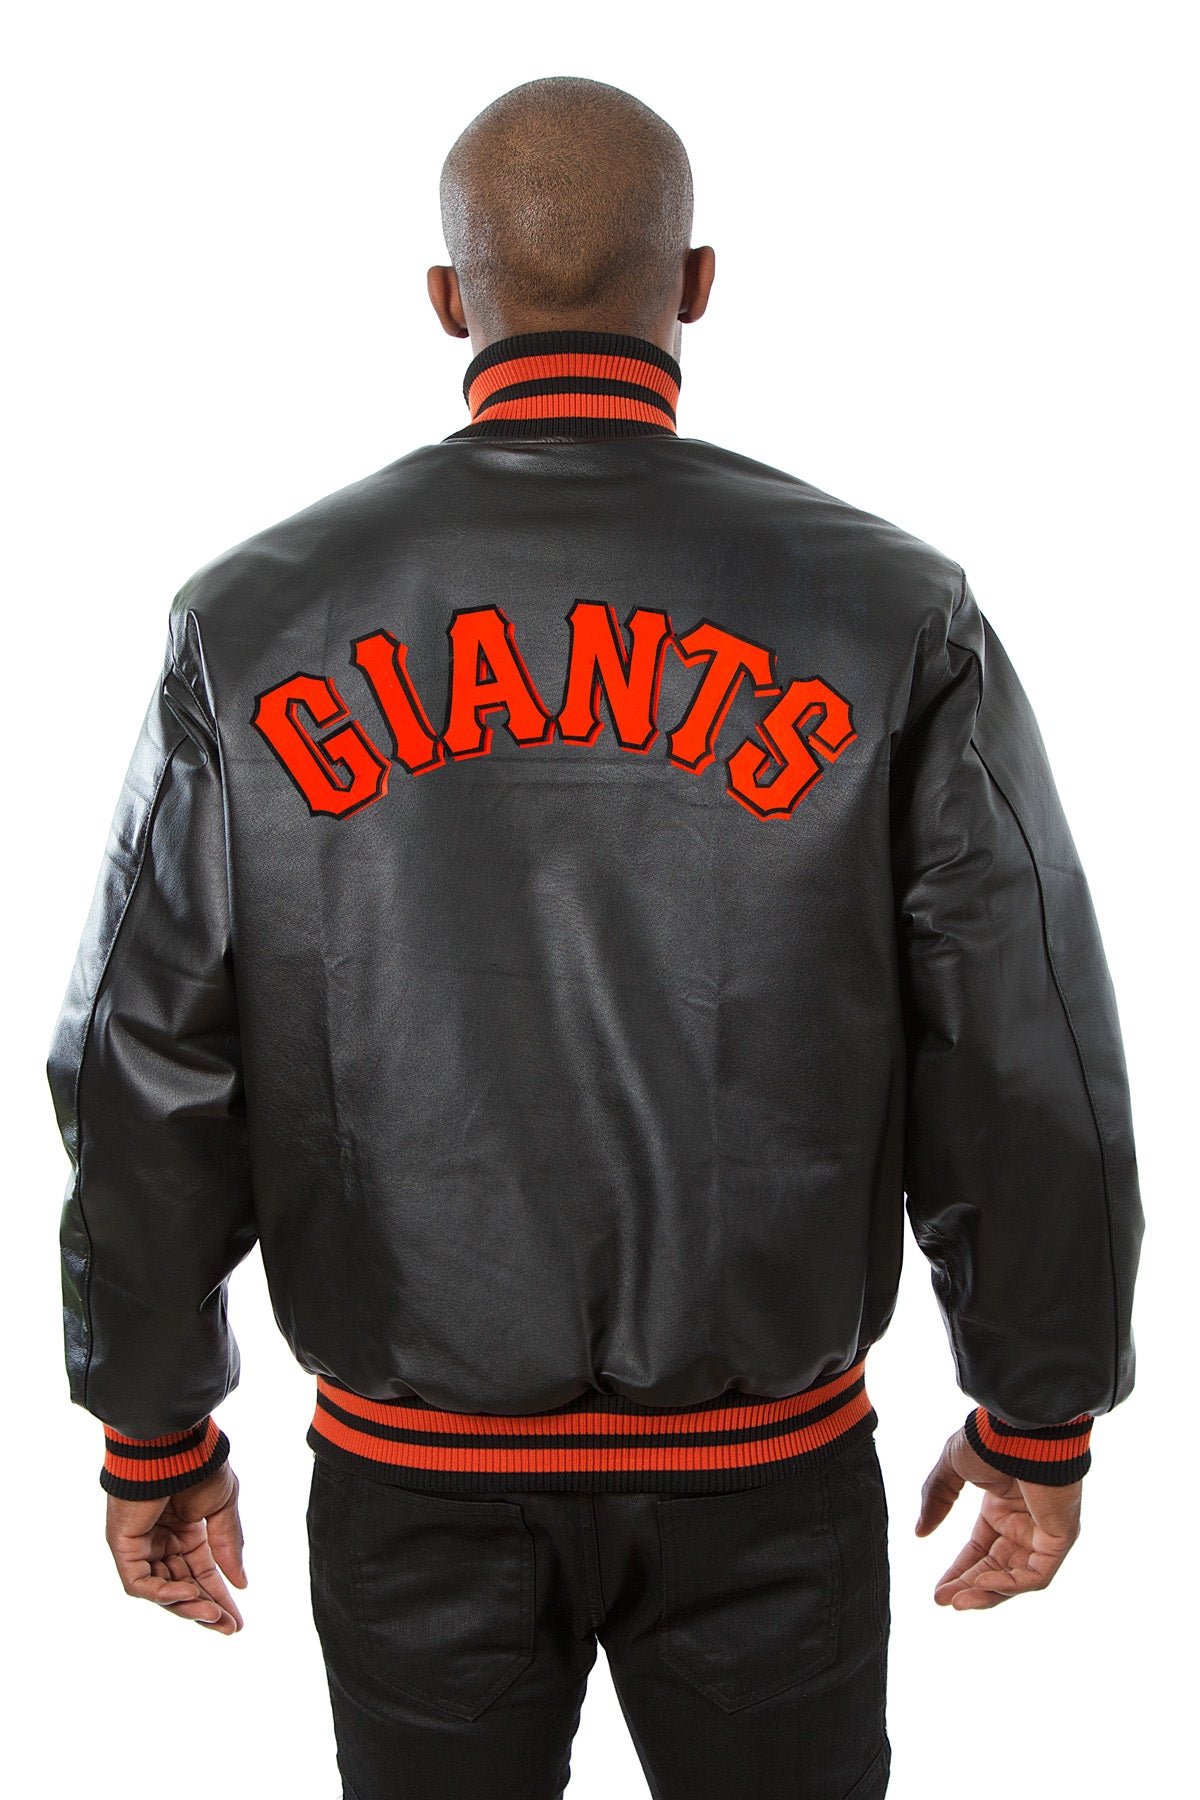 San Francisco Giants Women's Reversible jacket Black